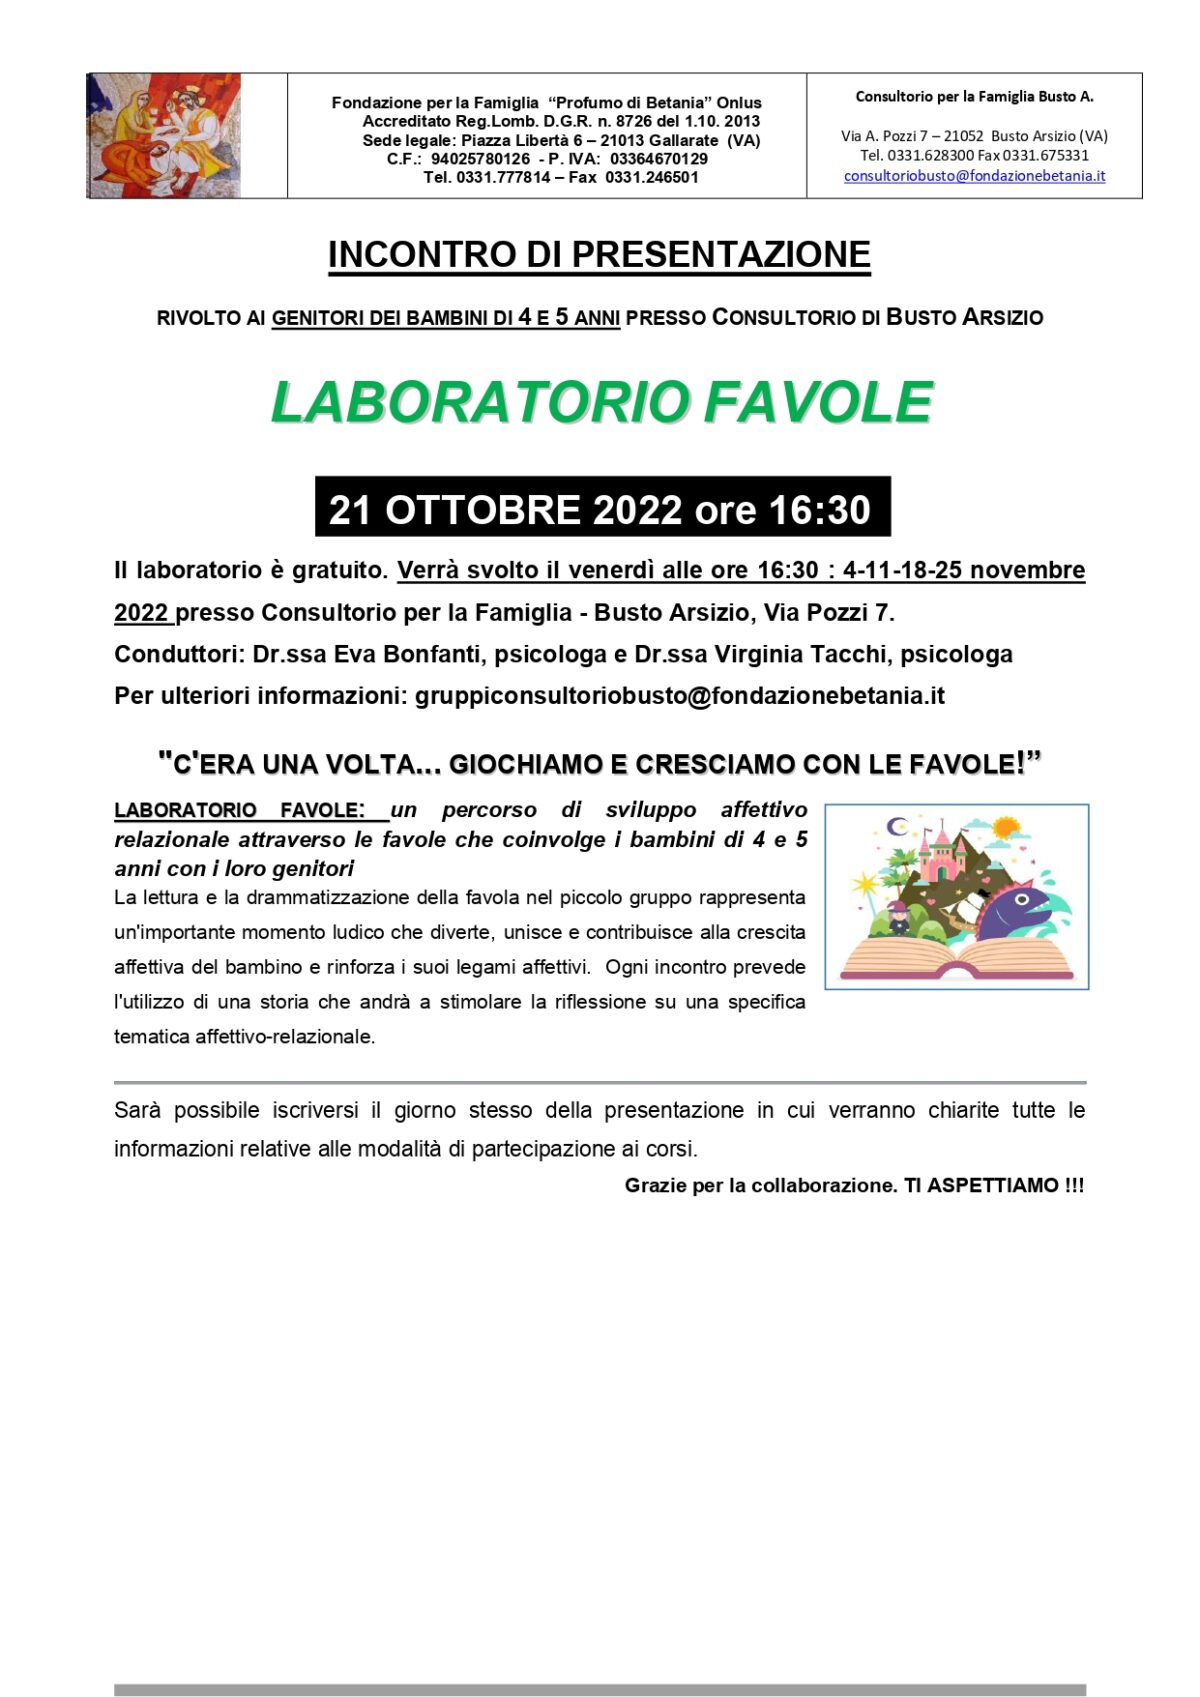 Lab-Favole-autunno-2022_page-0001-1200x1697.jpg